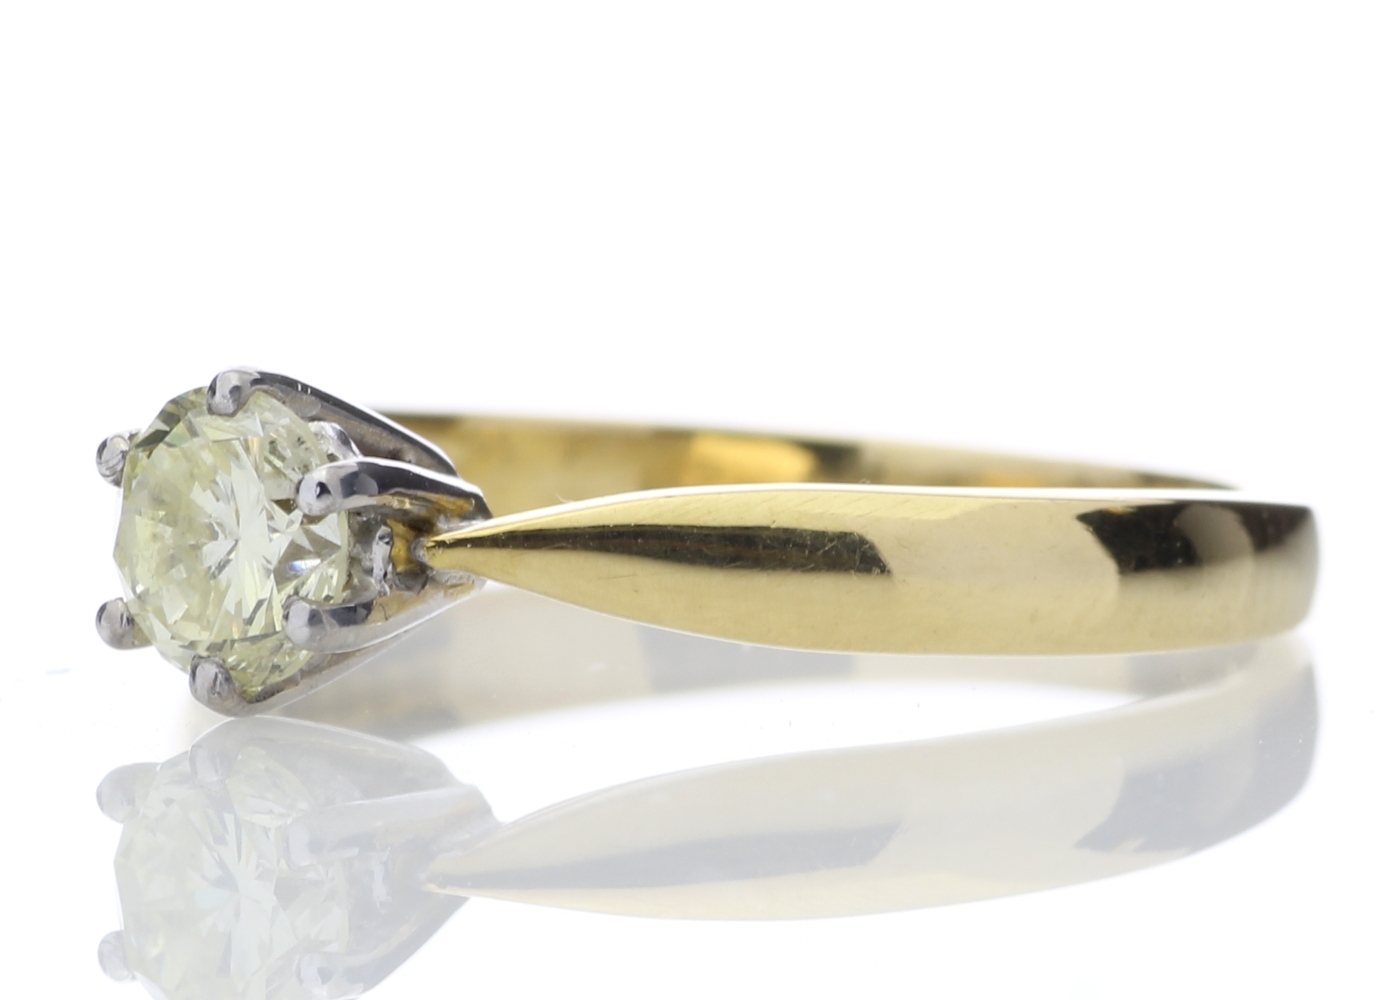 18ct Single Stone Fancy Yellow Diamond Ring 0.56 Carats - Image 2 of 4